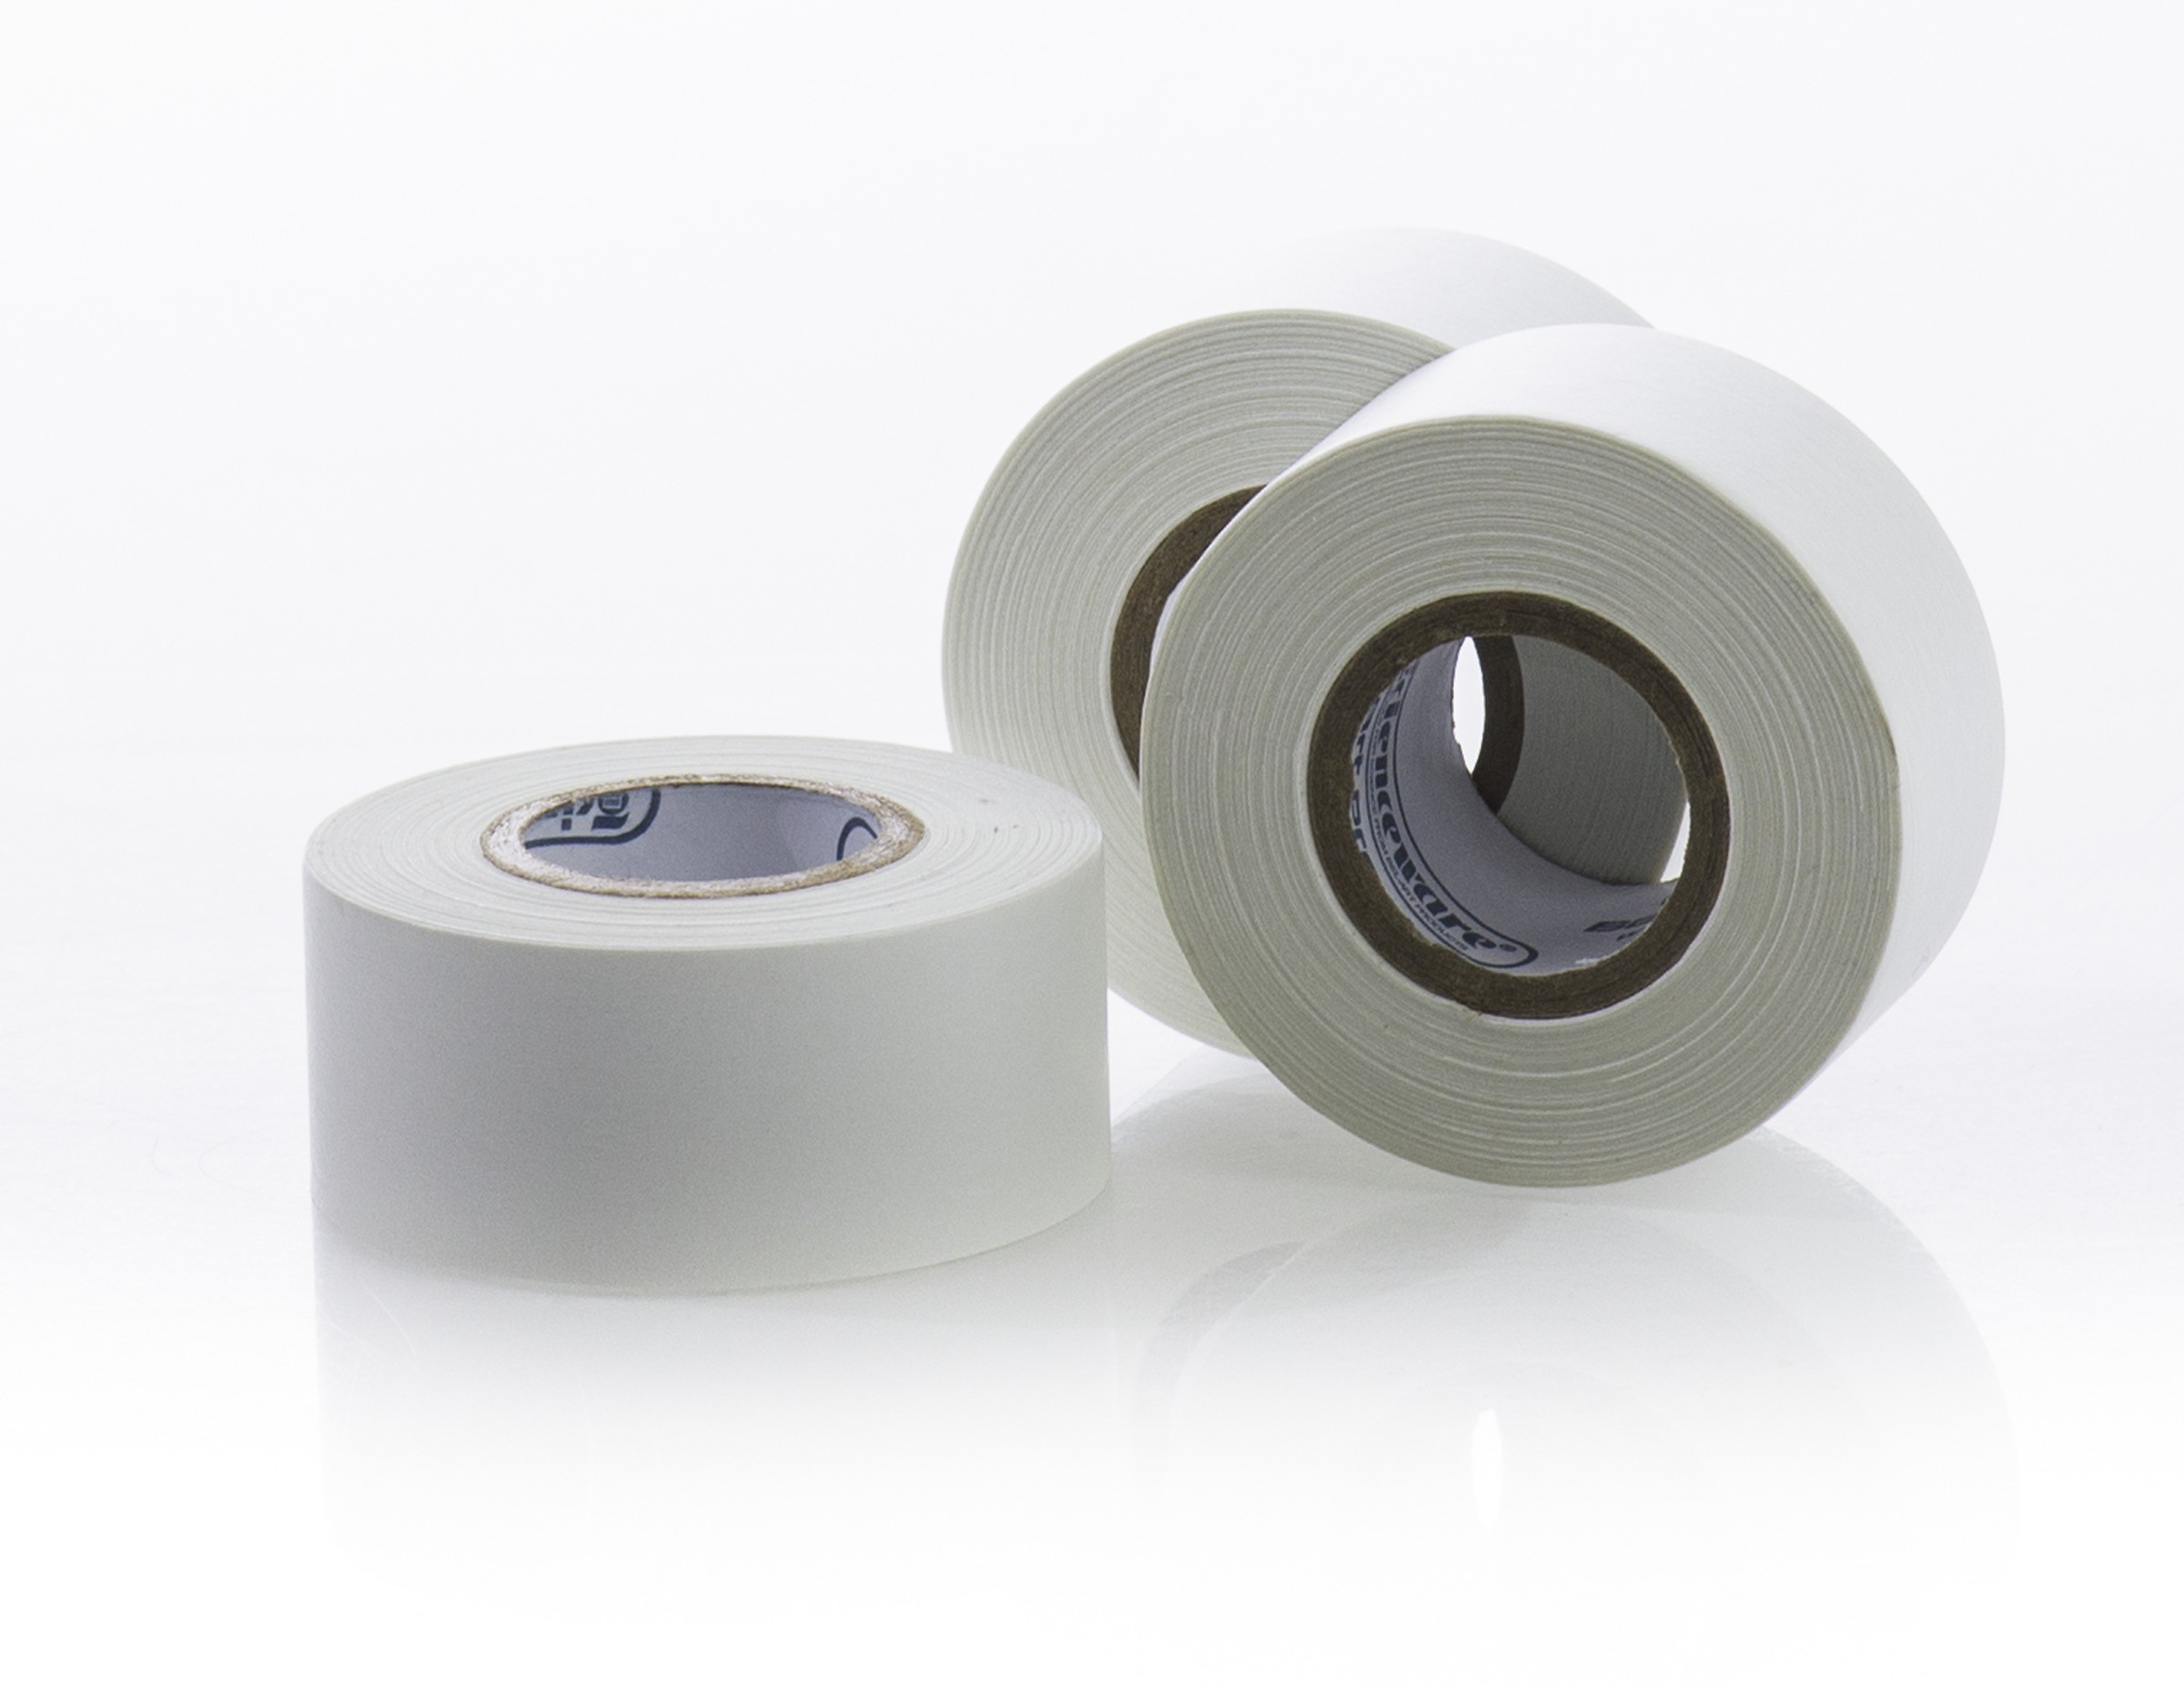 ³/₄ in F13480-0075 Core Pack of 4 Width 1 in Bel-Art Write-On White Label Tape; 15yd Length